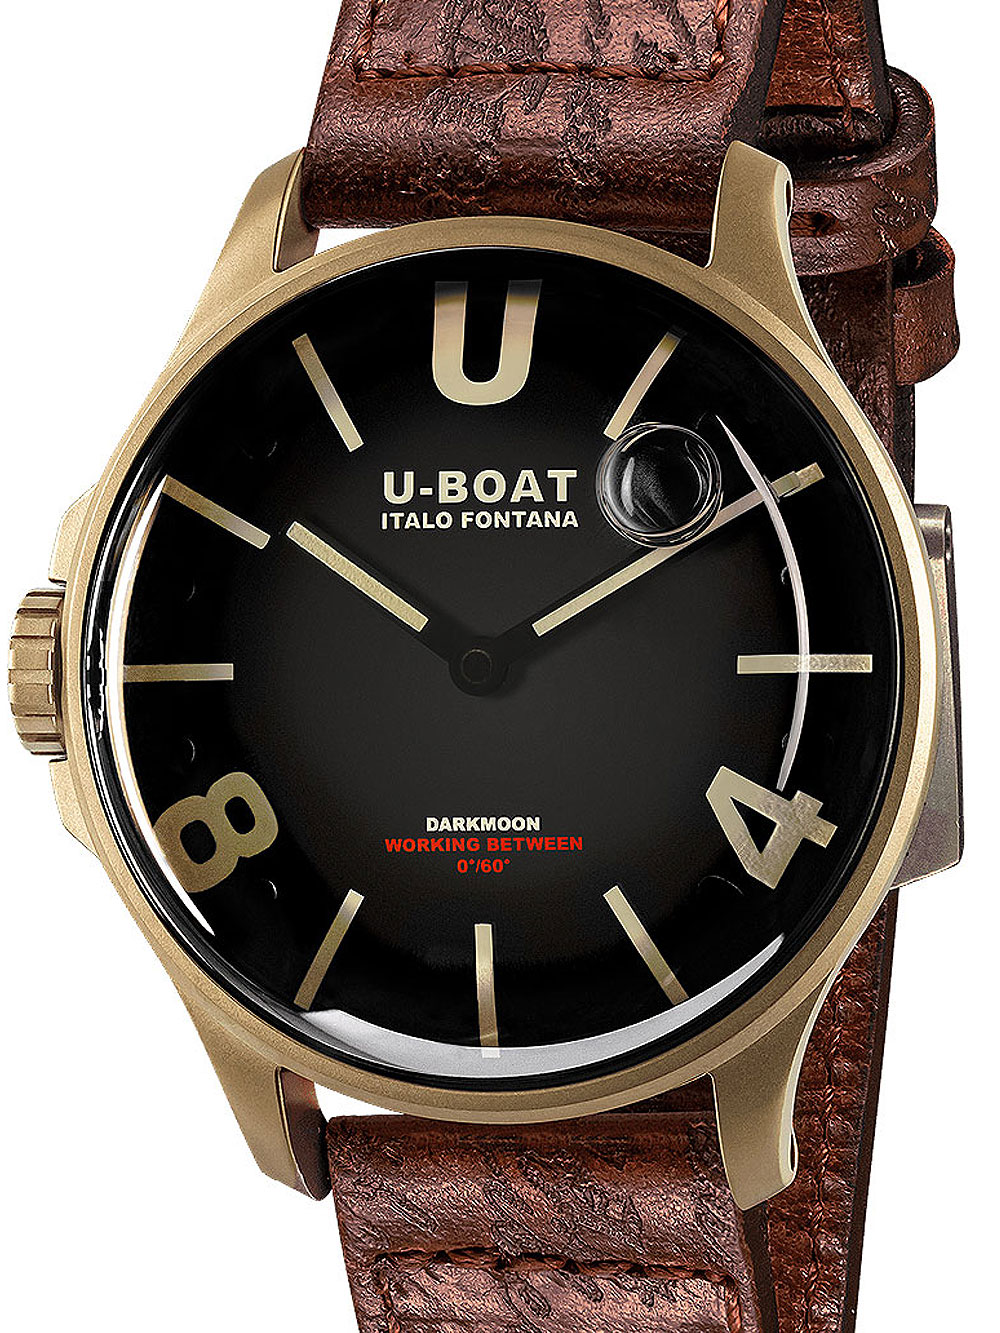 U-Boat 9304